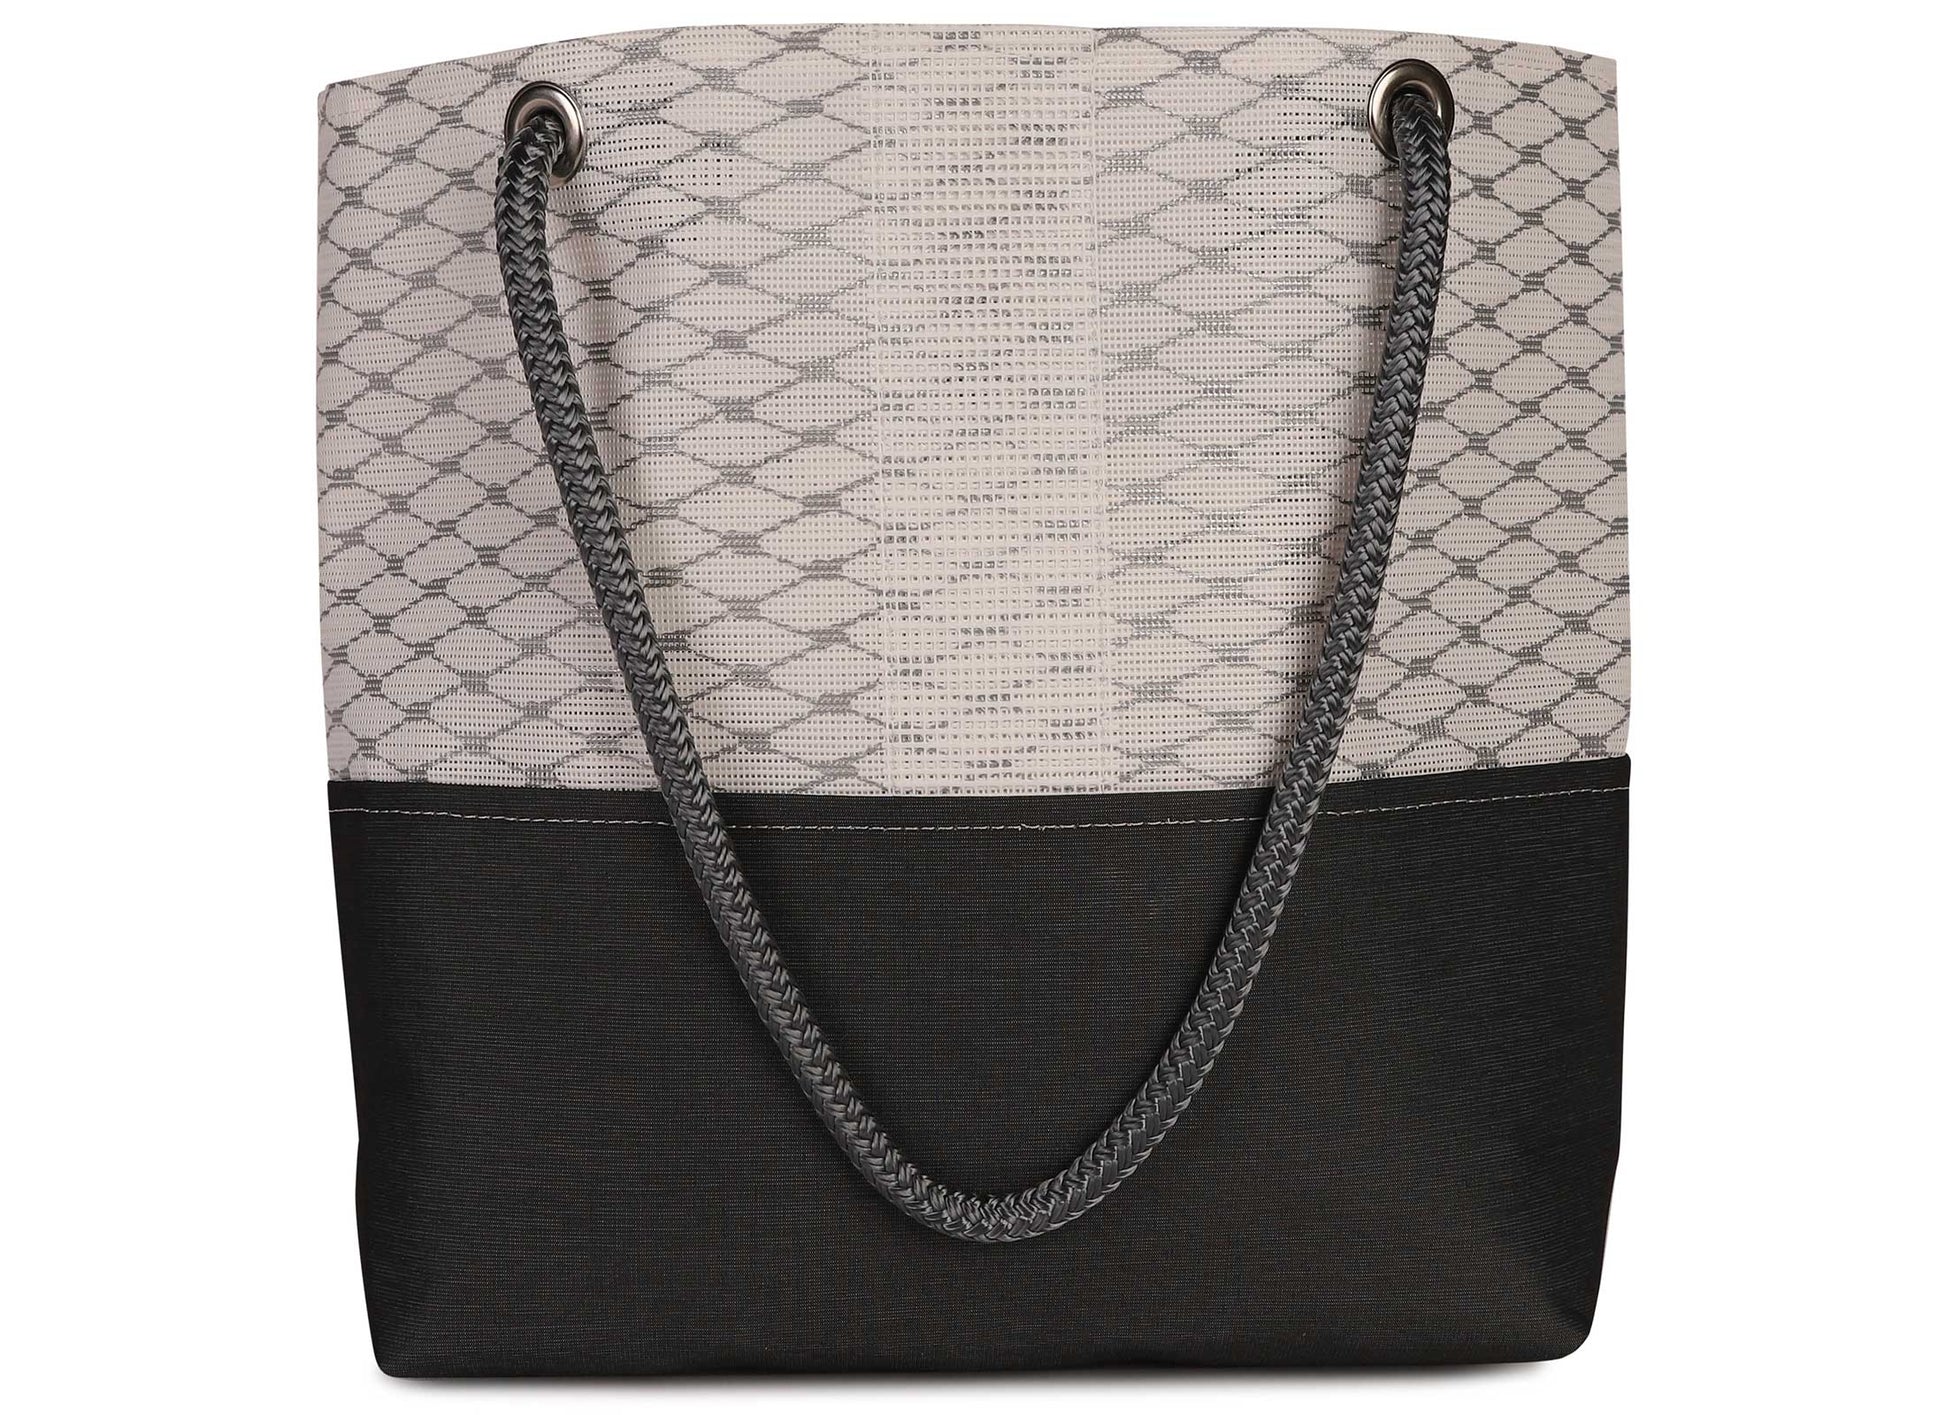 Women's Medium Genuine Python Skin Top Handle Handbags